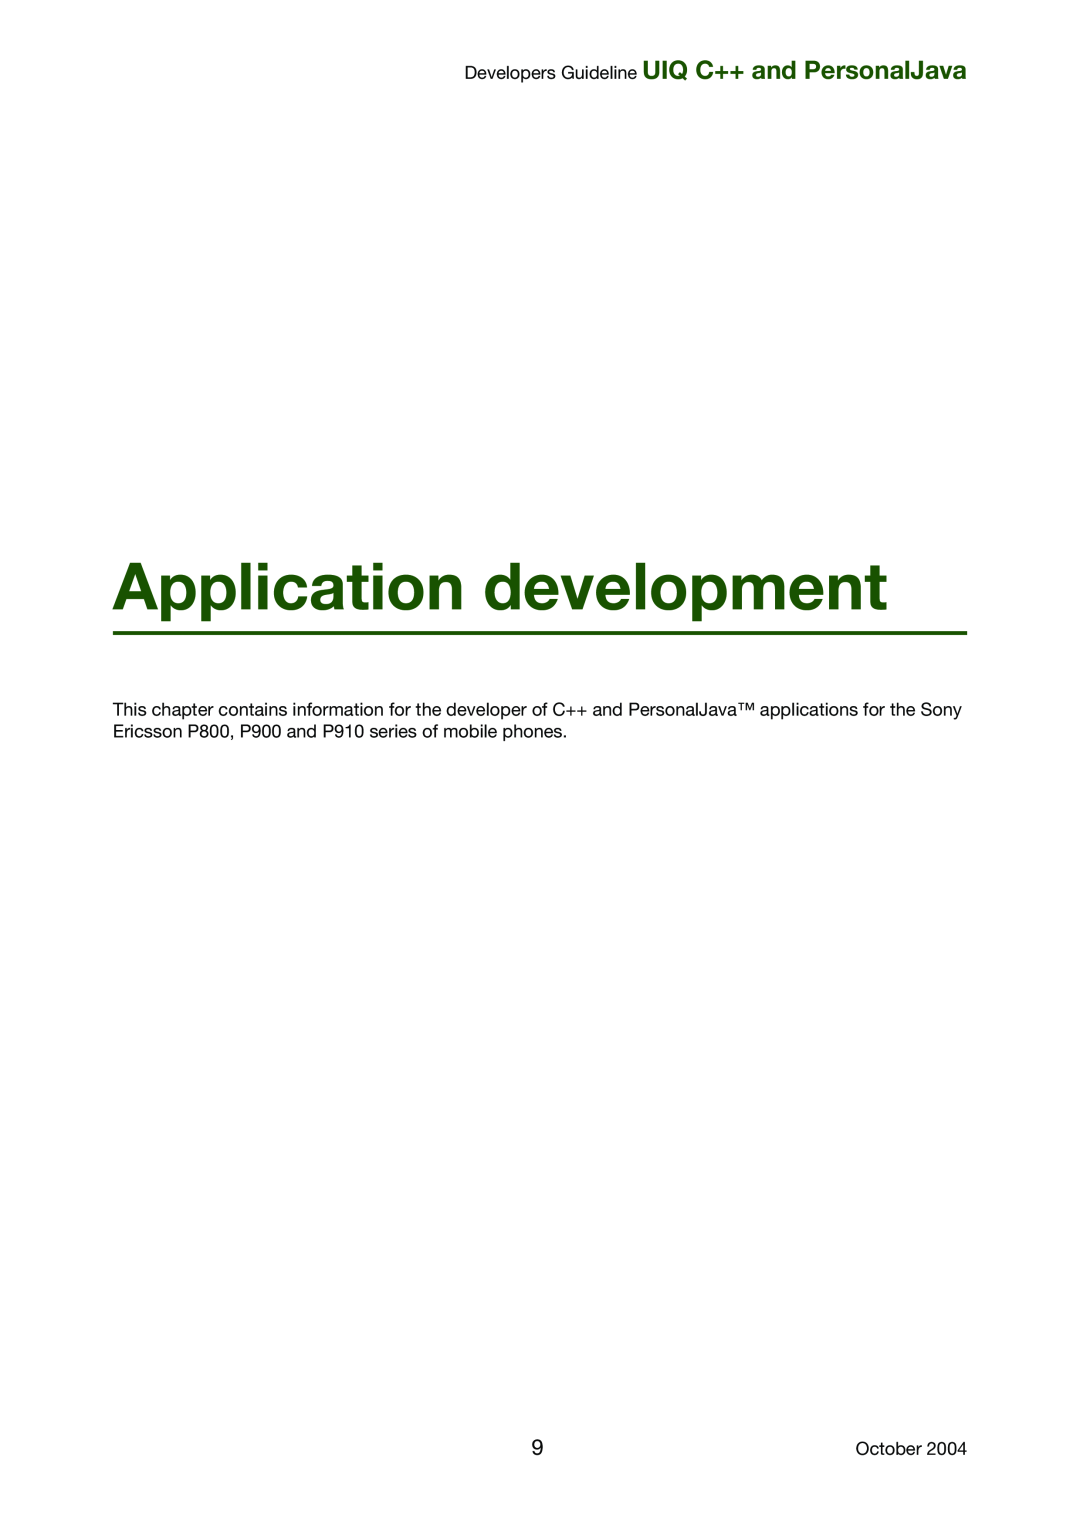 Sony Ericsson P800, P900 manual Application development, Developers Guideline UIQ C++ and PersonalJava 